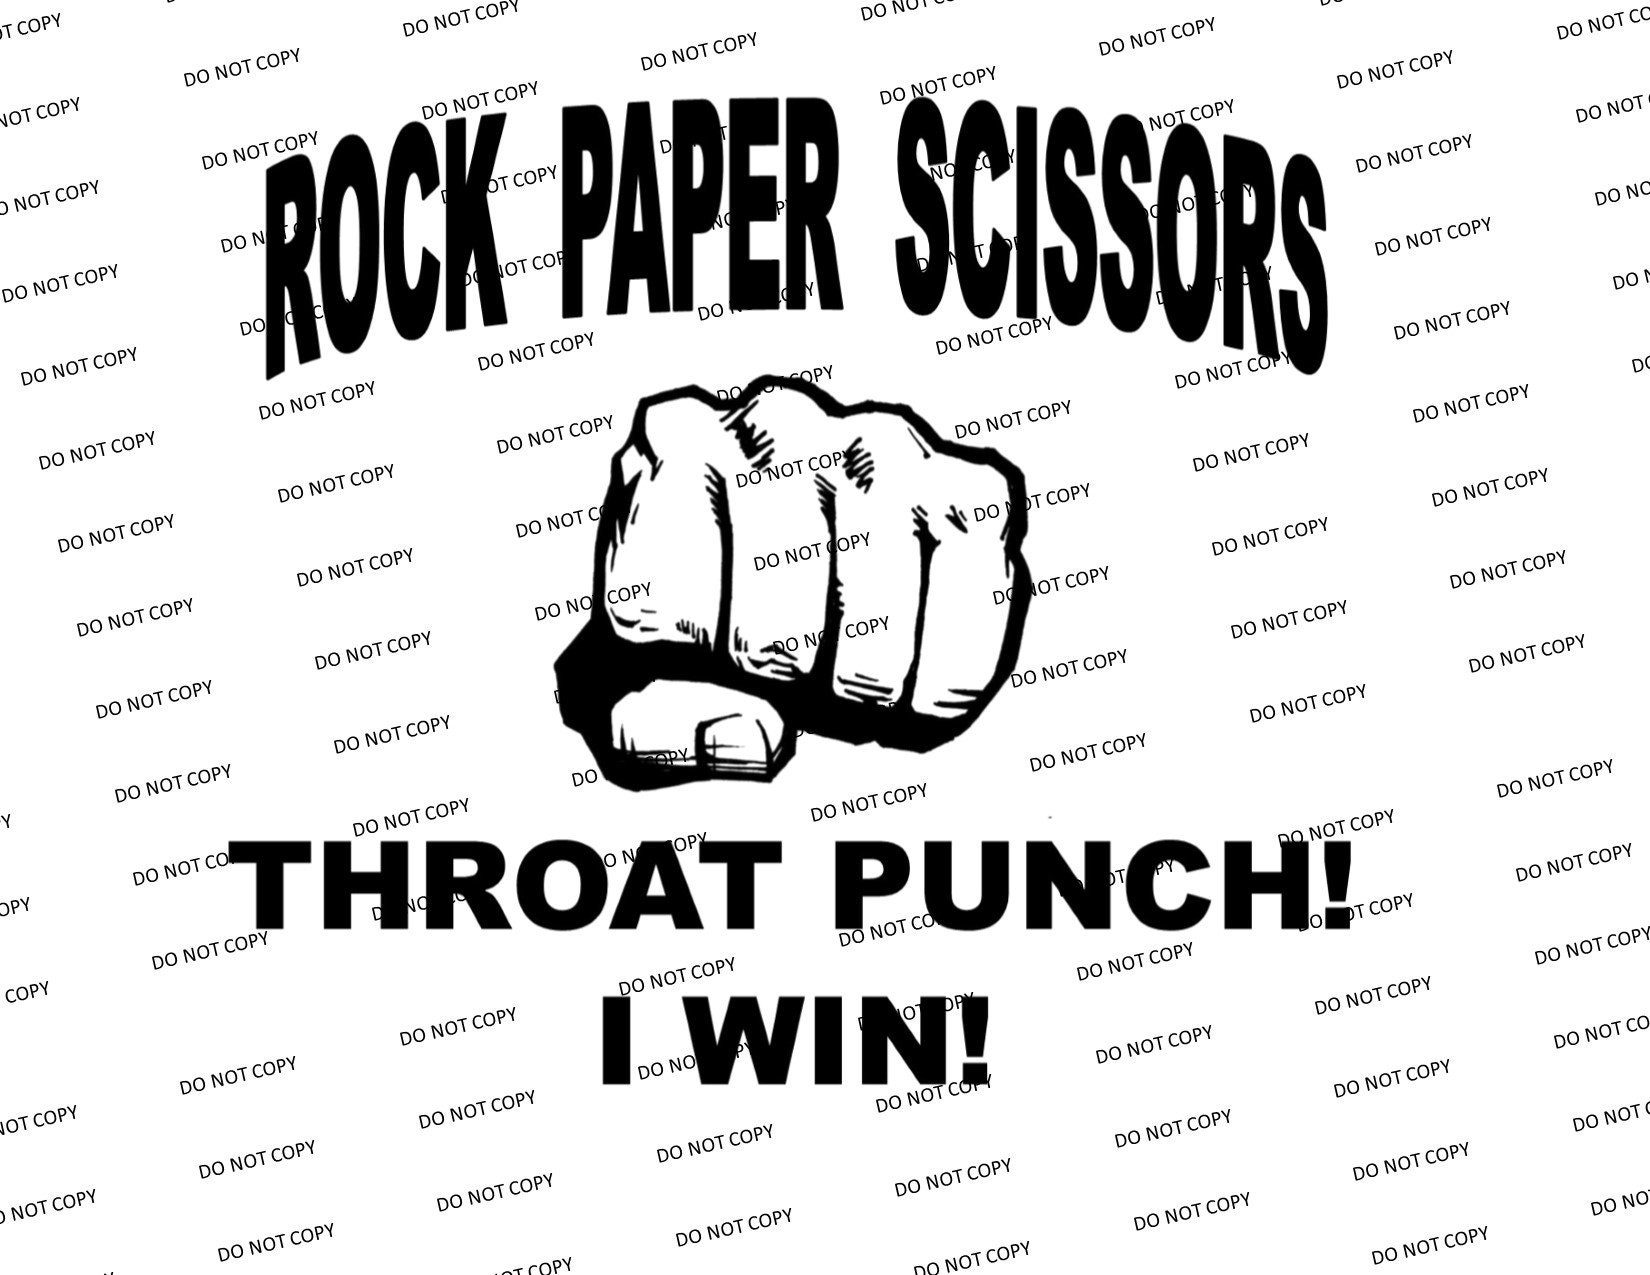 Rock Paper Scissors Throat Punch 